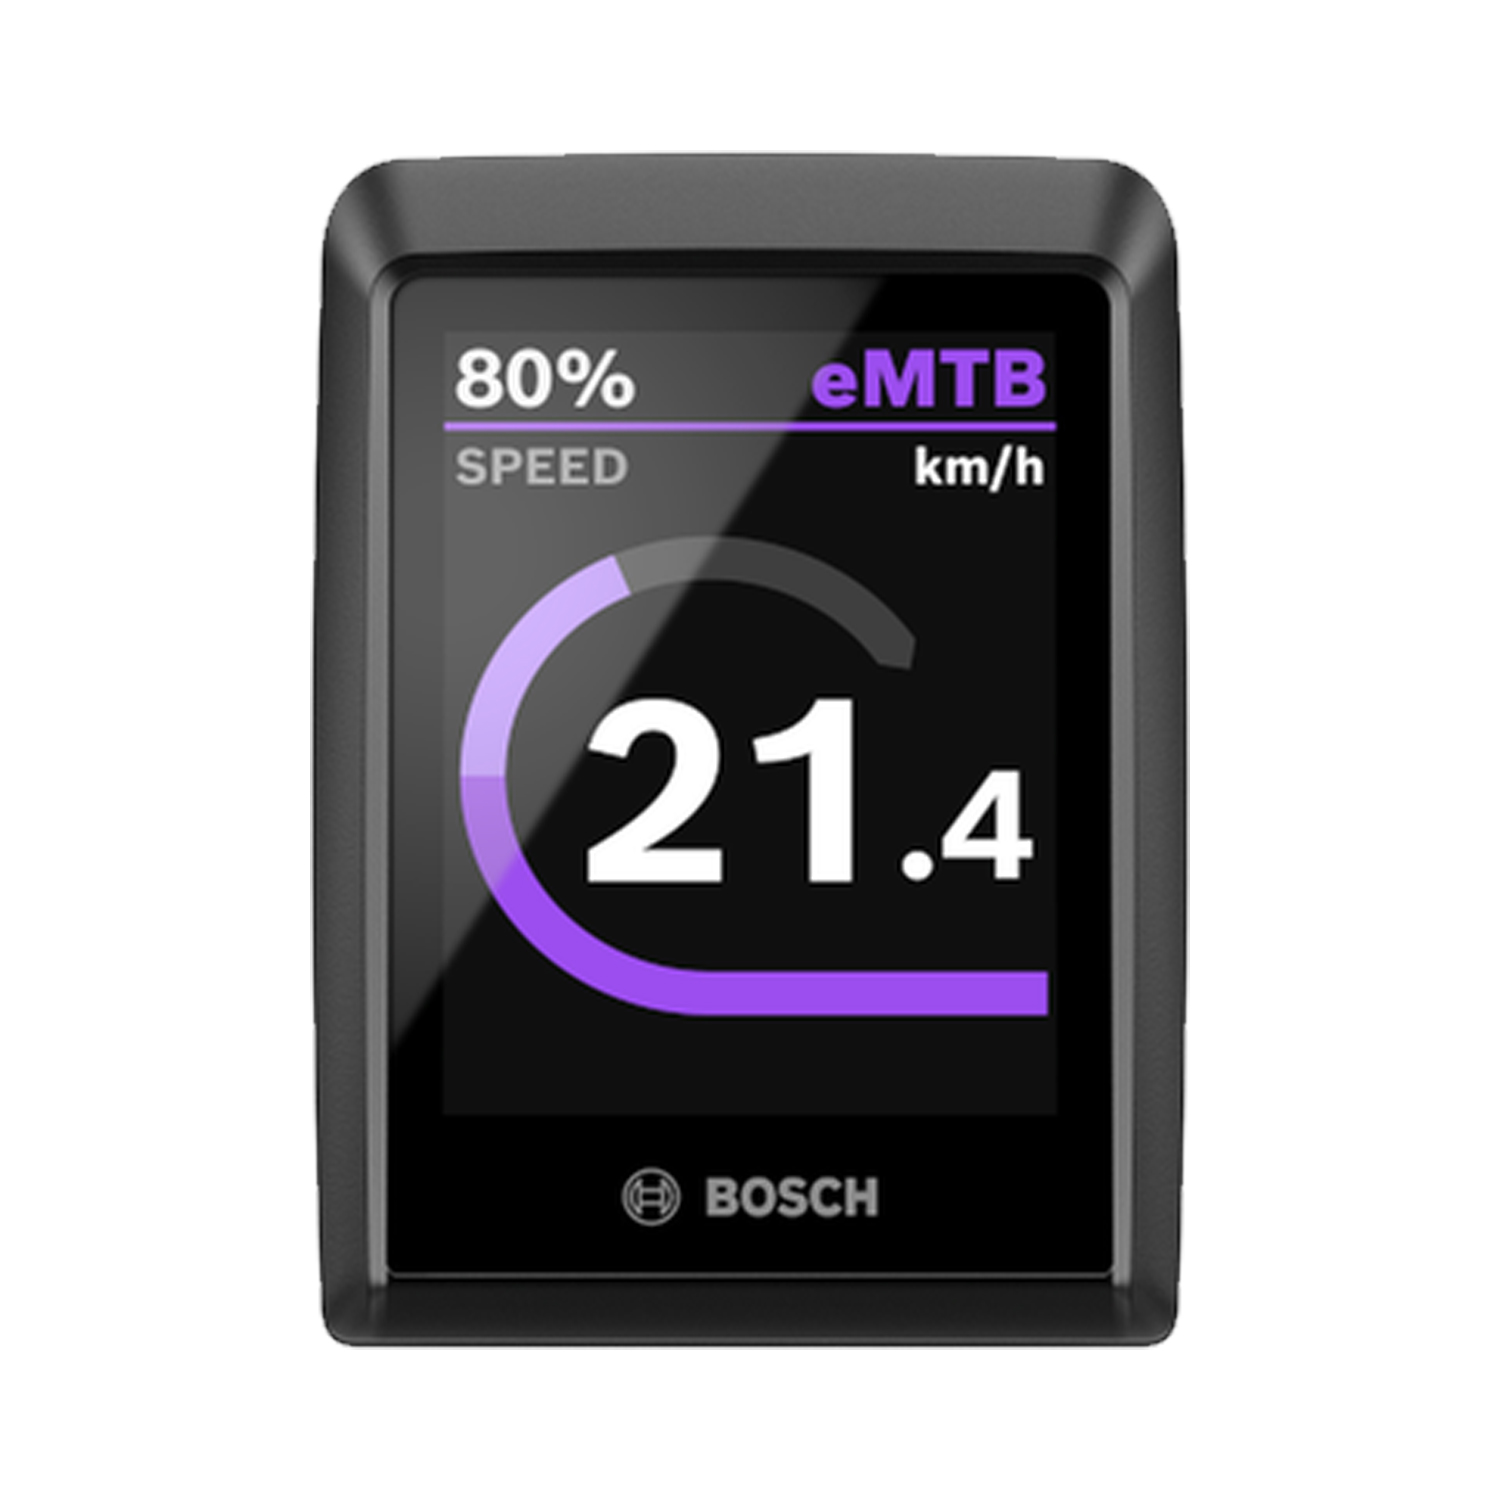 Bosch Kiox 300 display (BHU3600, BES3)